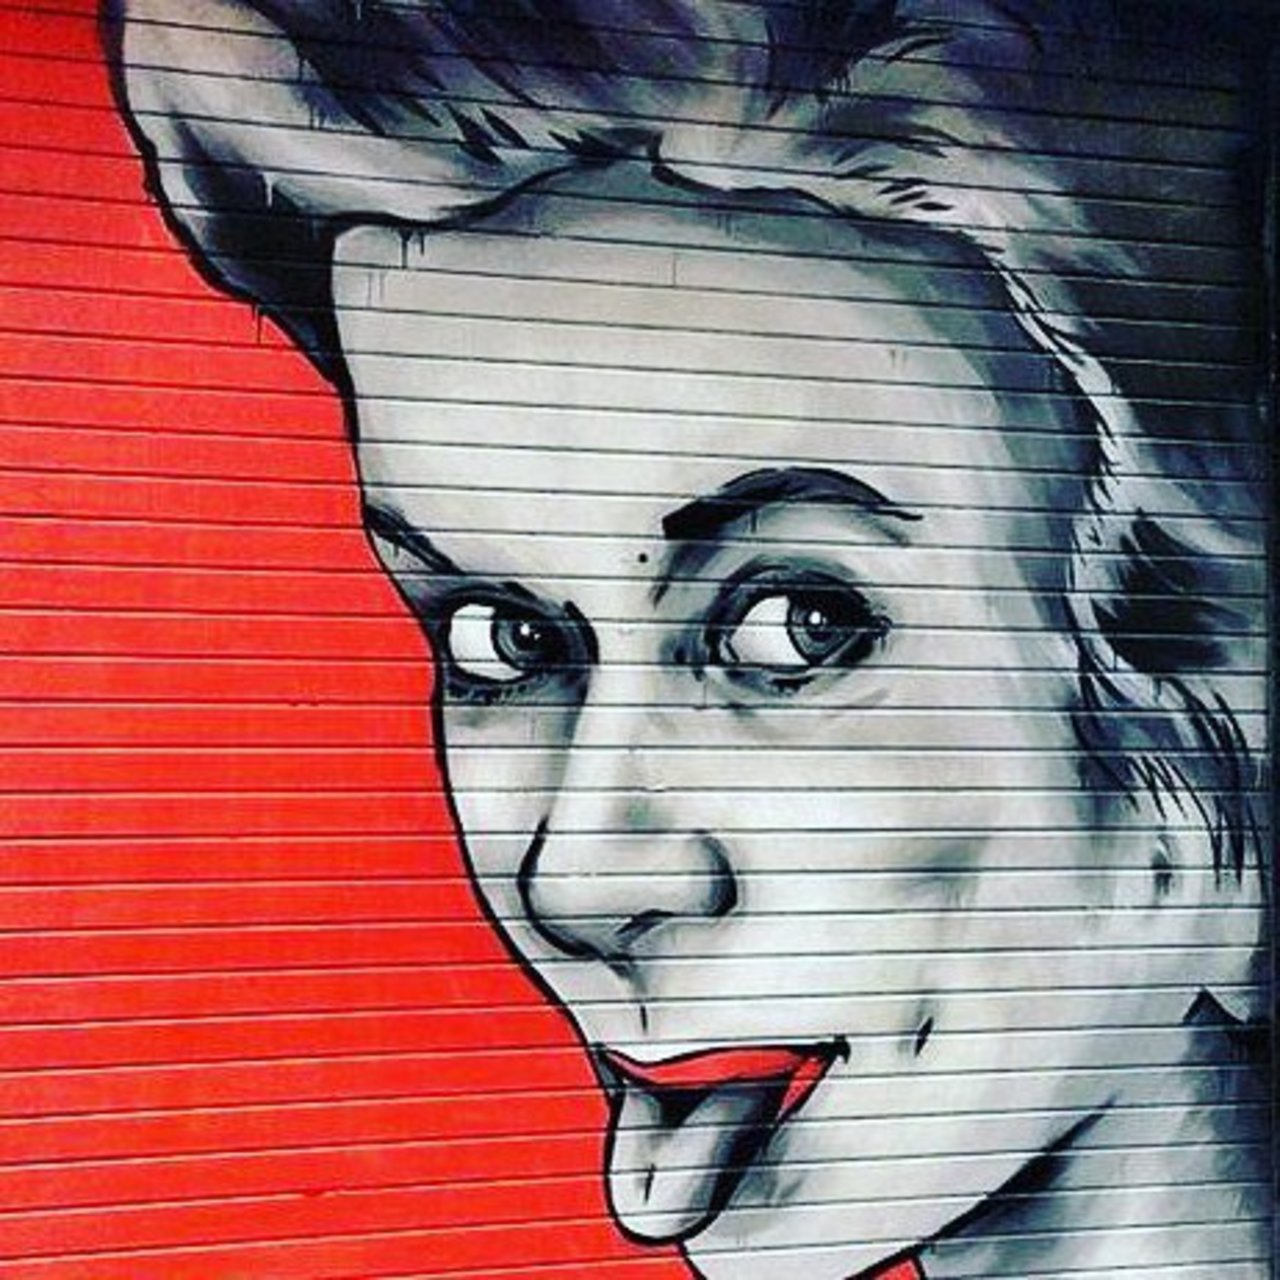 #Paris #graffiti photo by @senyorerre http://ift.tt/1kBiu8I #StreetArt https://t.co/godN90o5ii